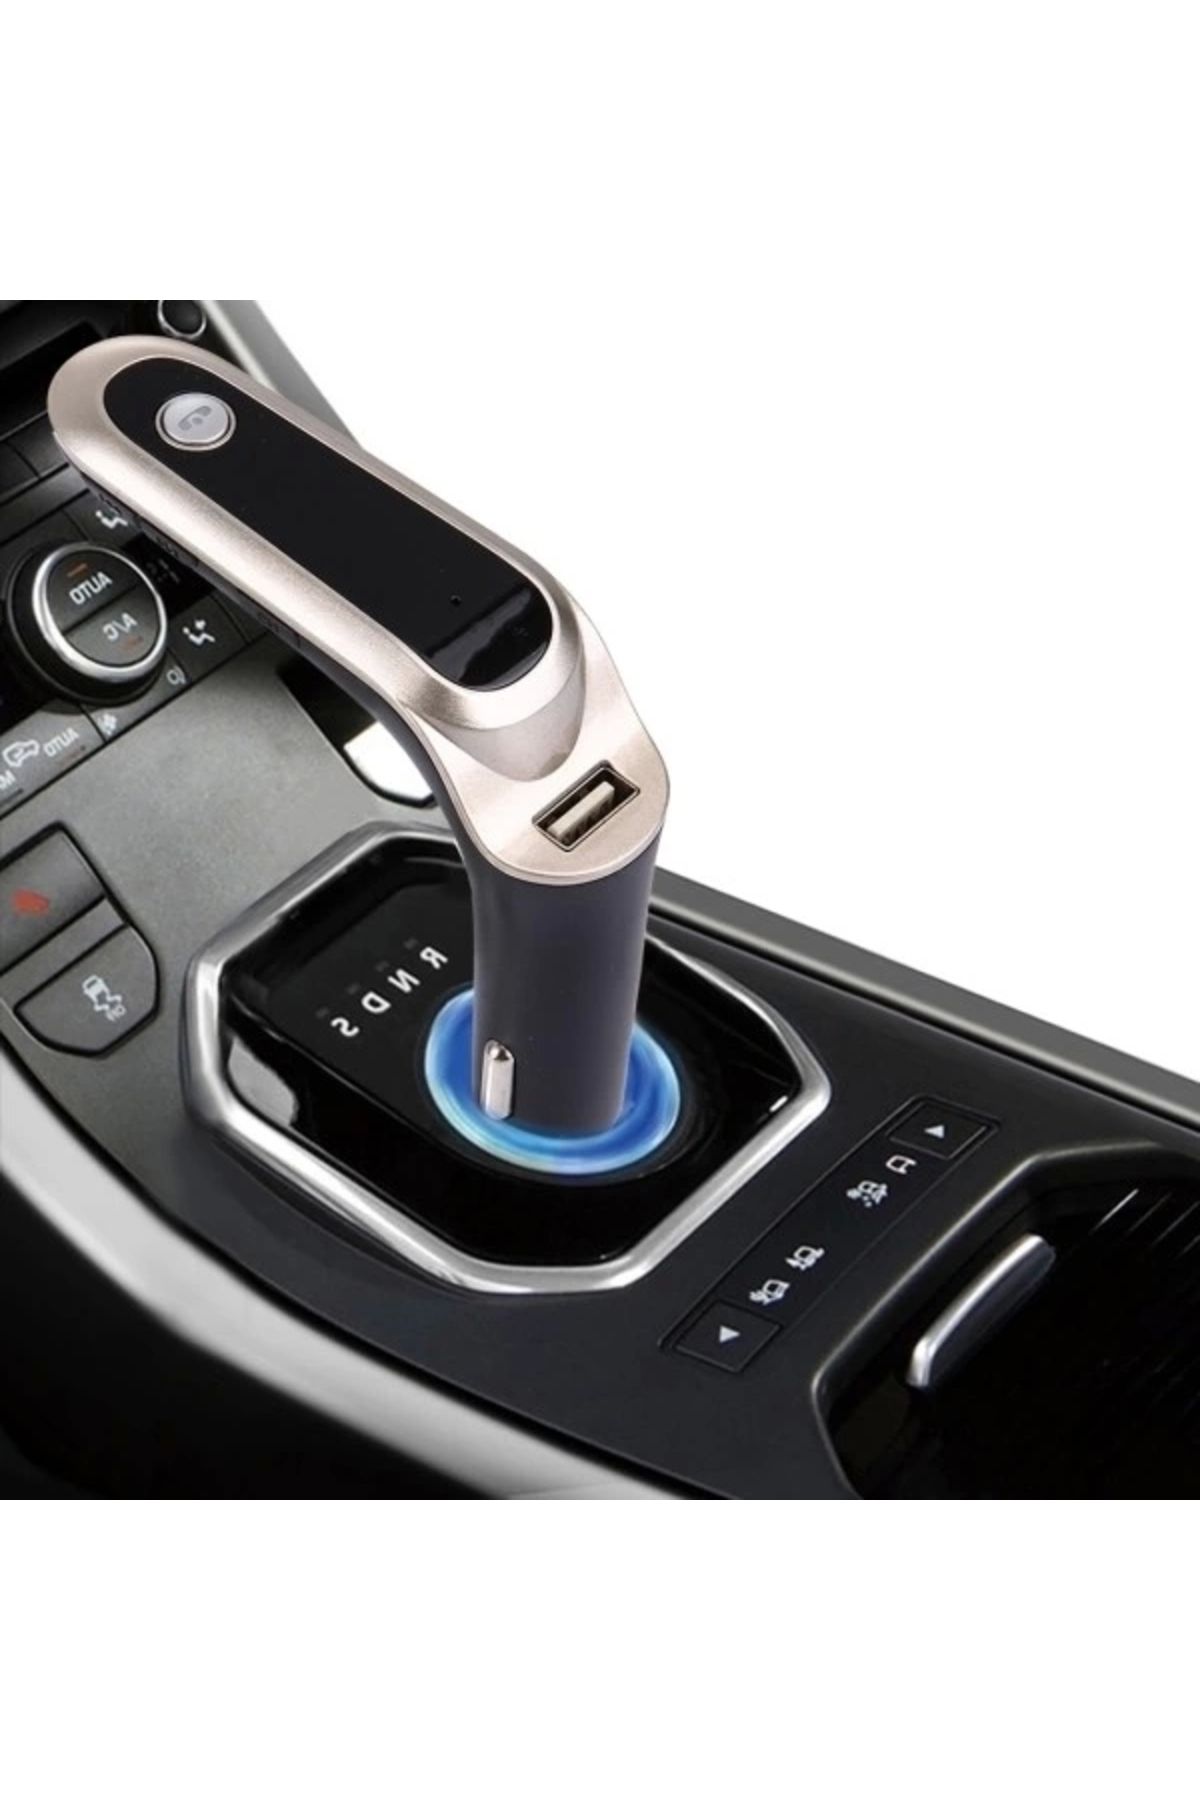 Epilons Cars7 Bluetooth Hafıza Kart Girişli 4.0 Araç Kiti Çakmaklık Mp3 Fm Transmitter